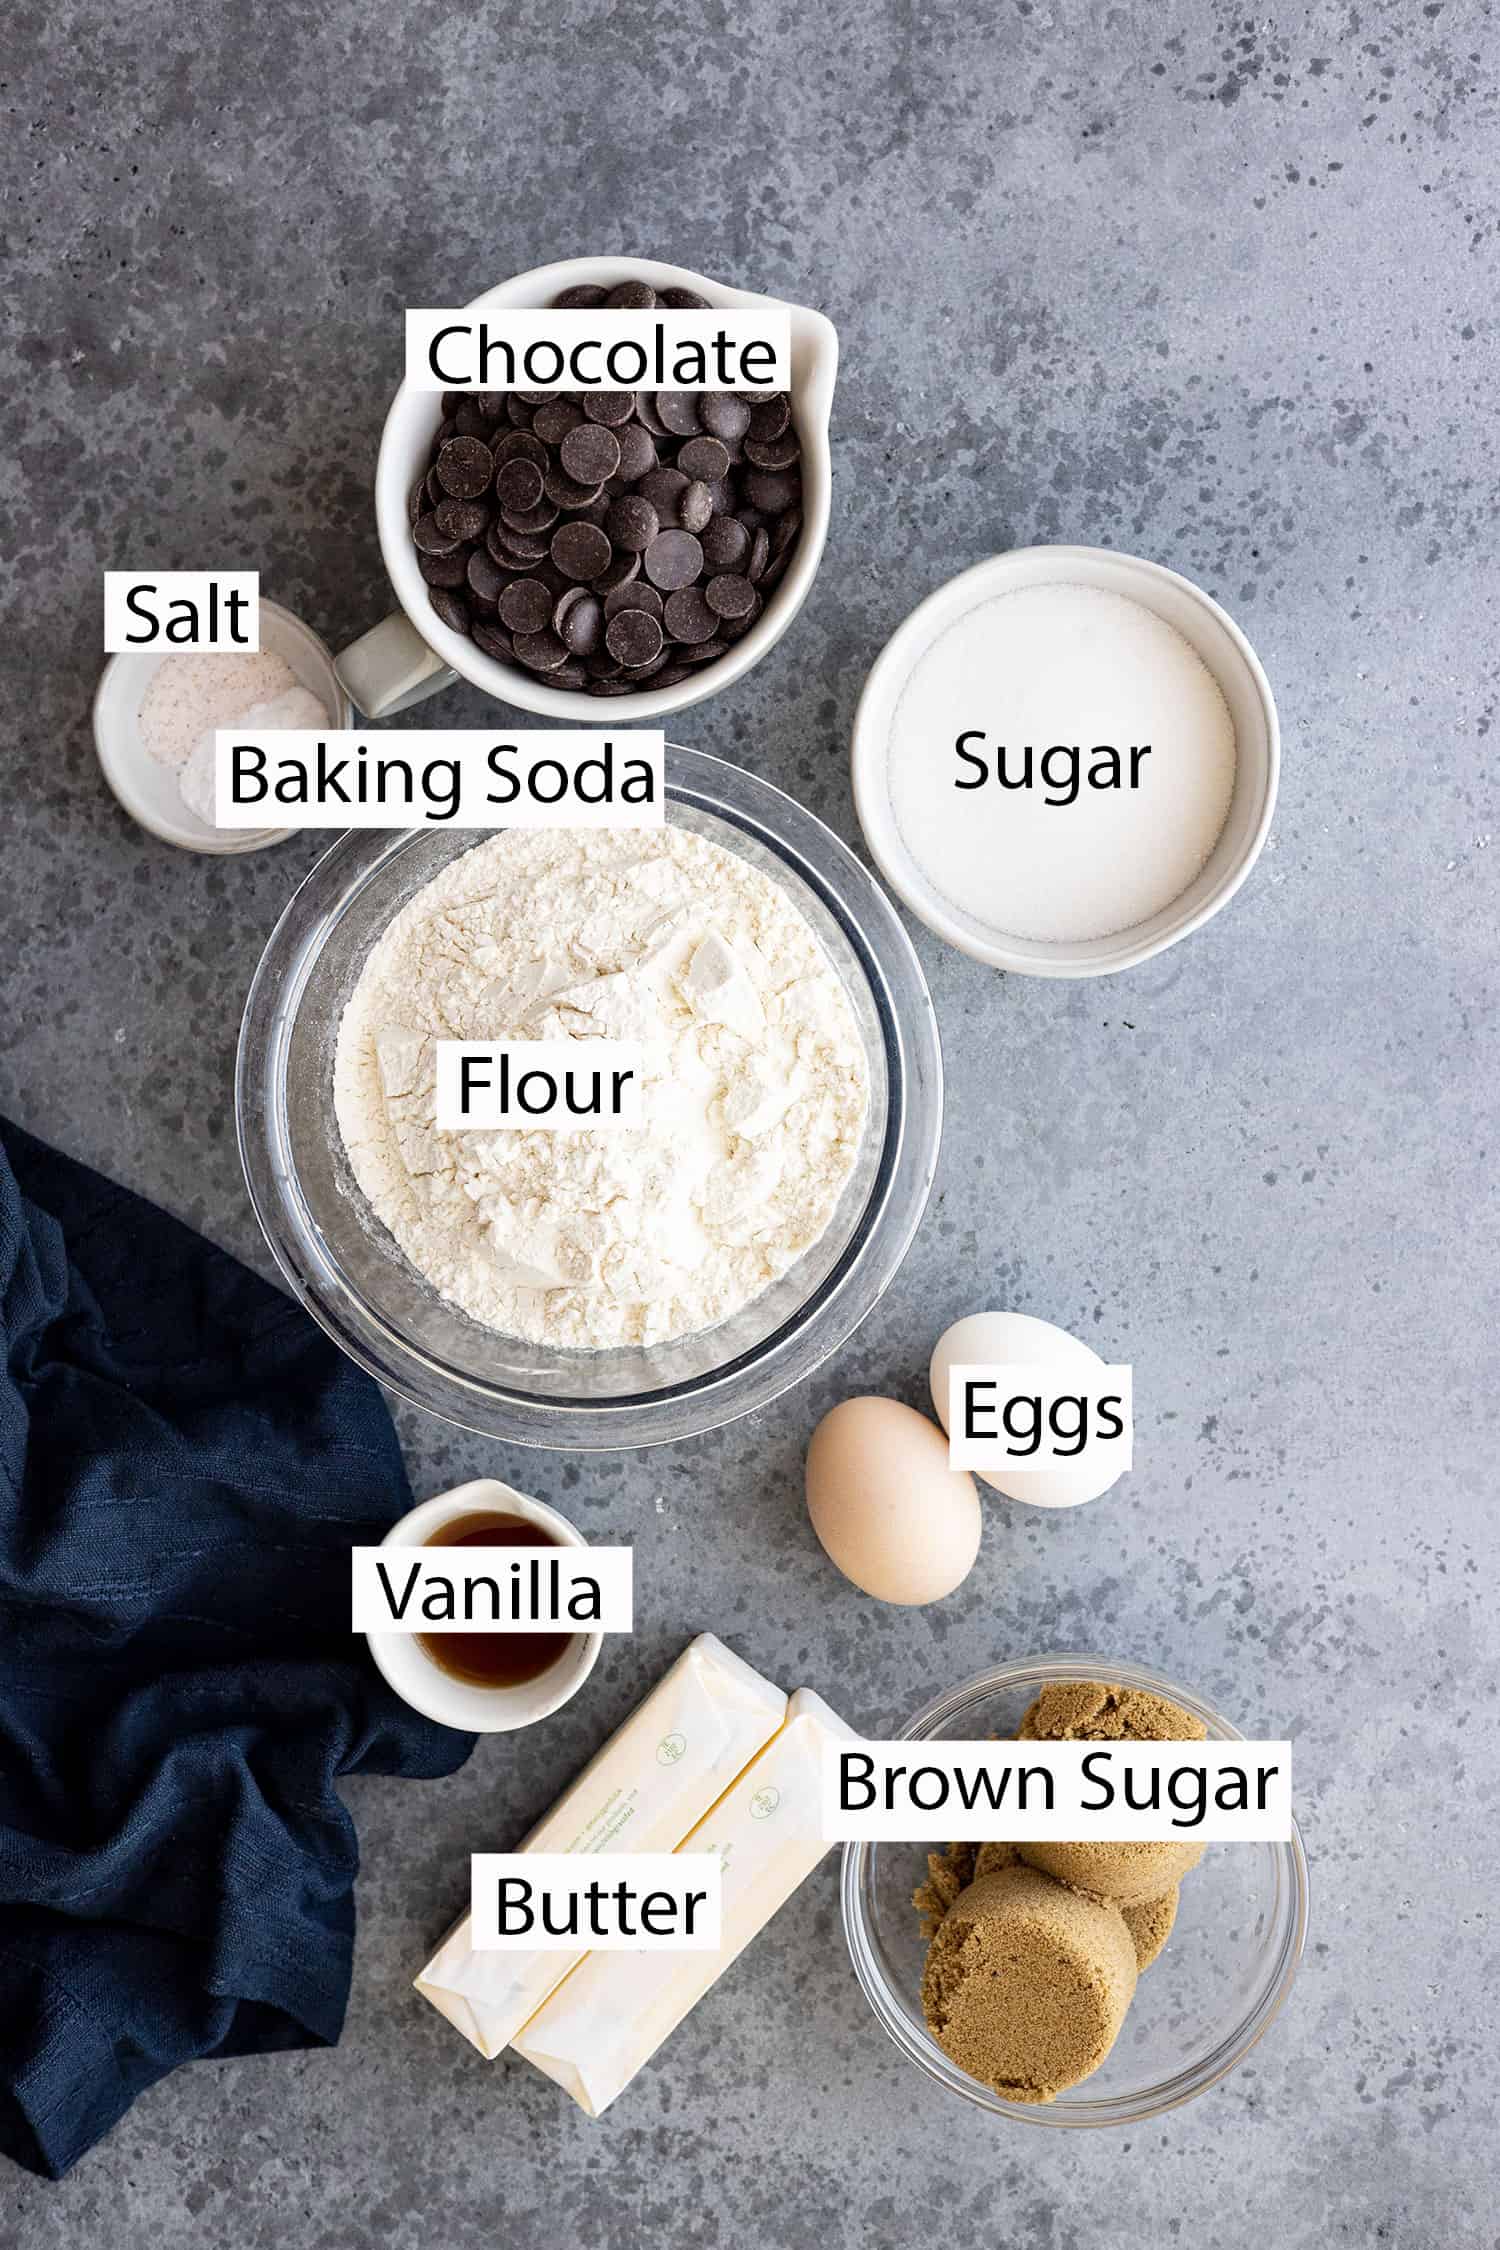 Ingredients: flour, sugar, brown sugar, salt, baking soda, eggs, vanilla, butter, and chocolate. 